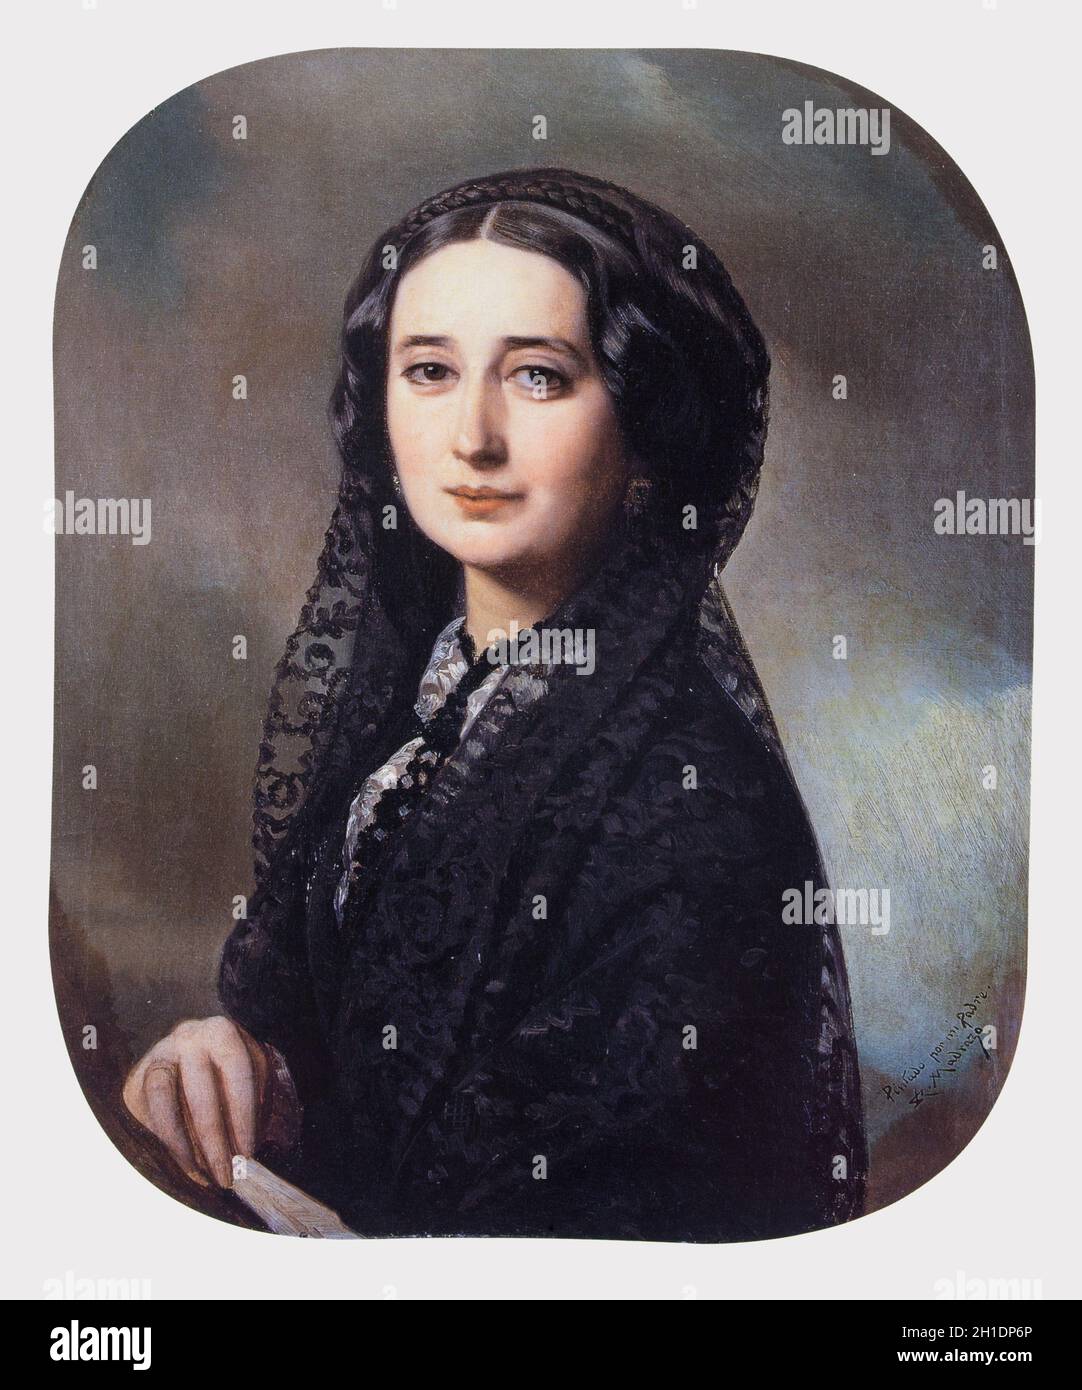 Portrait of Carolina Coronado, 19th Century Spanish writer. Painted by Federico Madrazo at Museo del Prado, Madrid Stock Photo